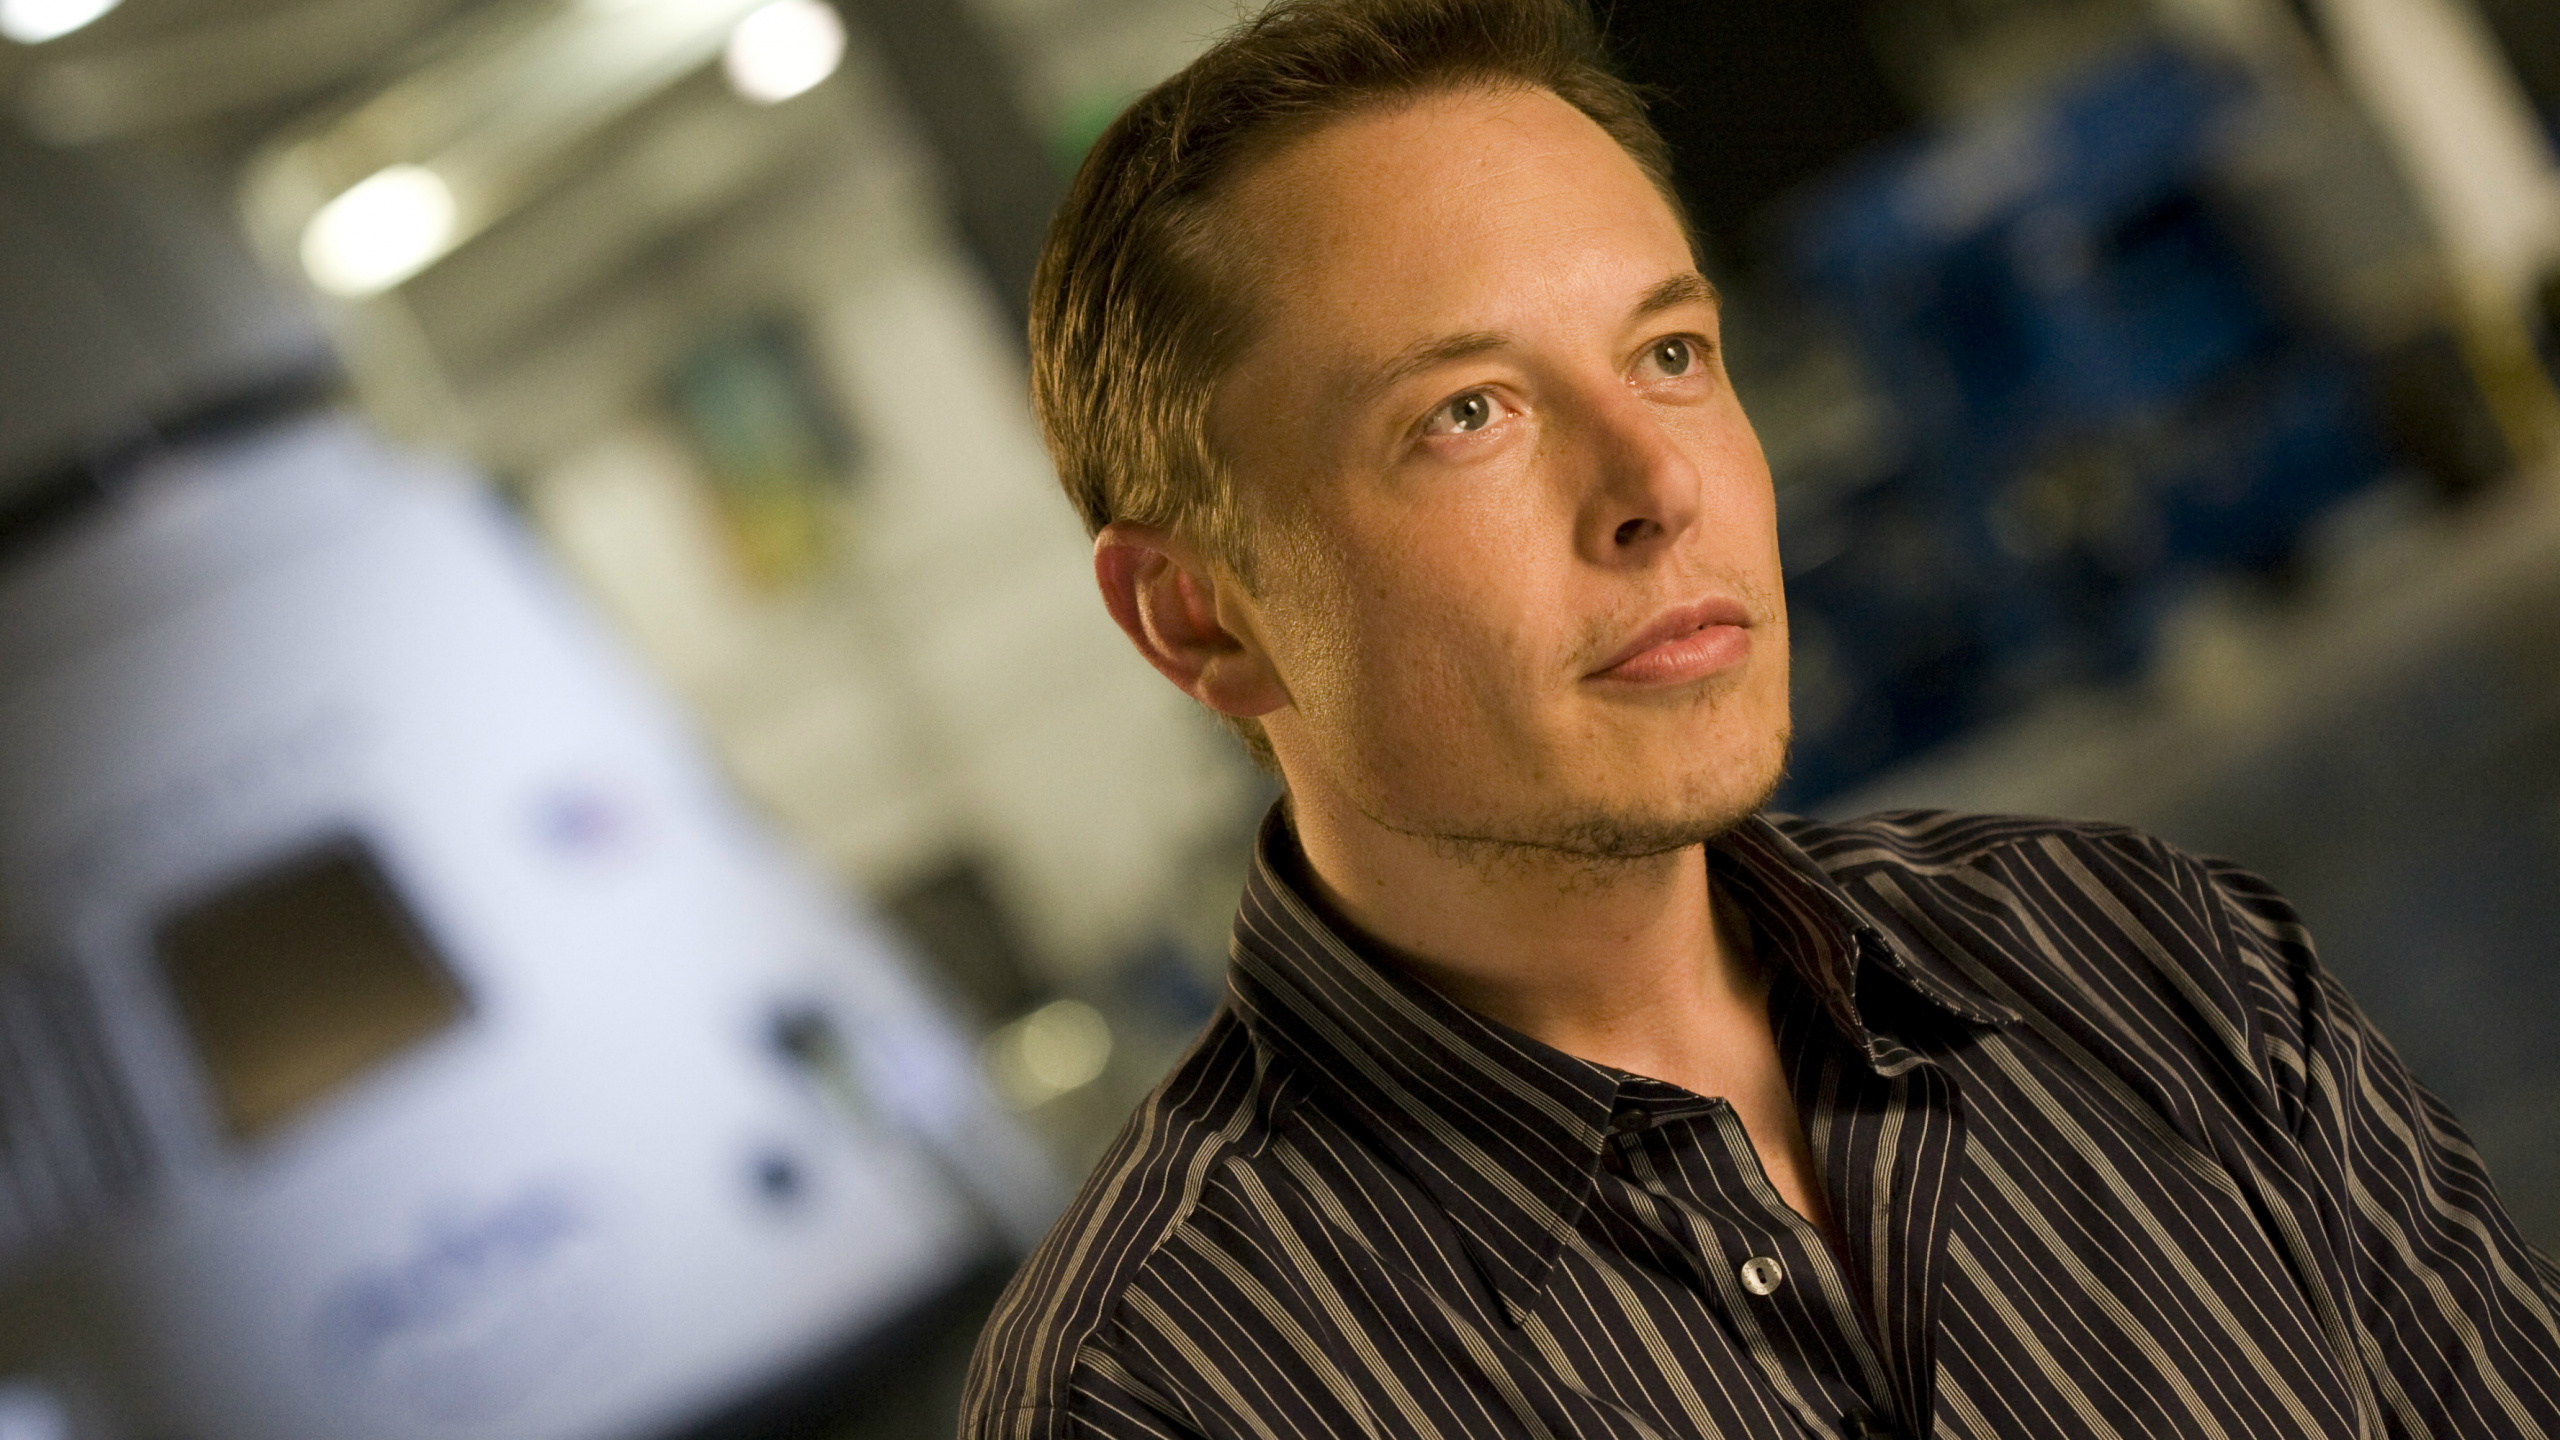 Elon Musk, SpaceX, Hyperloop, White Collar Worker, Gesichtsbehaarung. Wallpaper in 2560x1440 Resolution